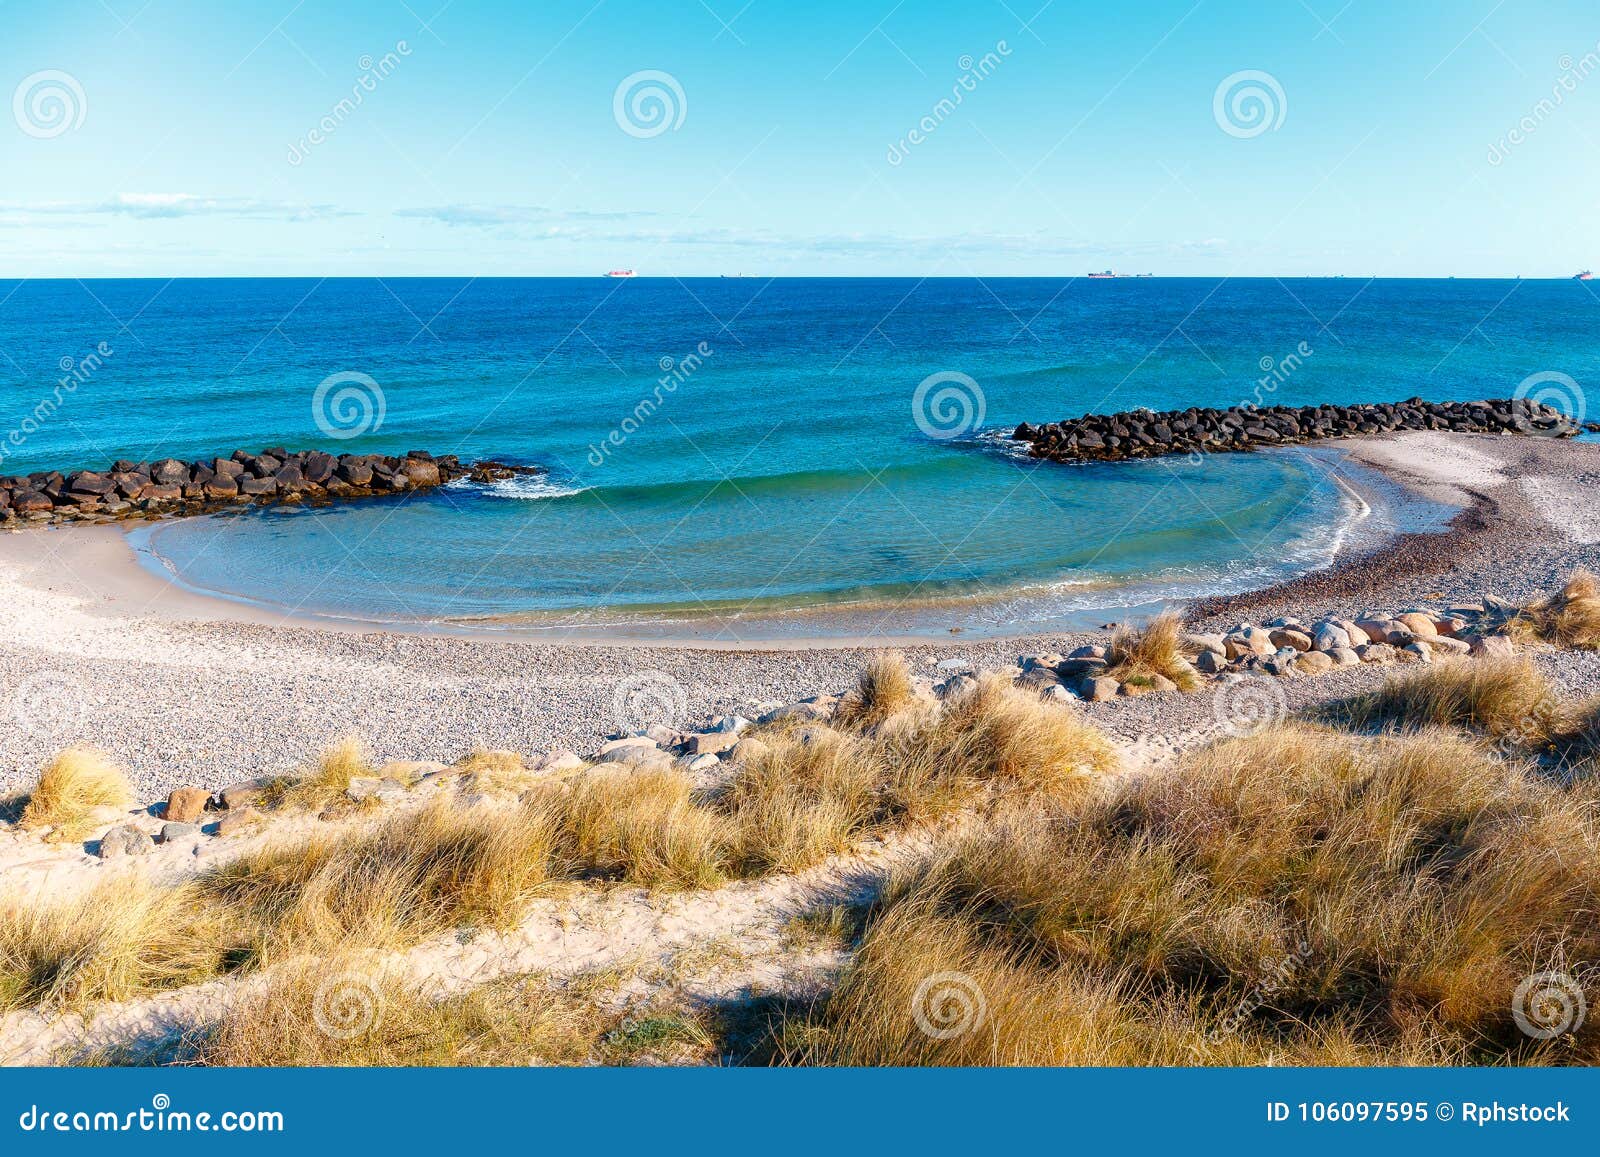 Beach at Skagen, Denmark stock image. Image of landscapes - 106097595